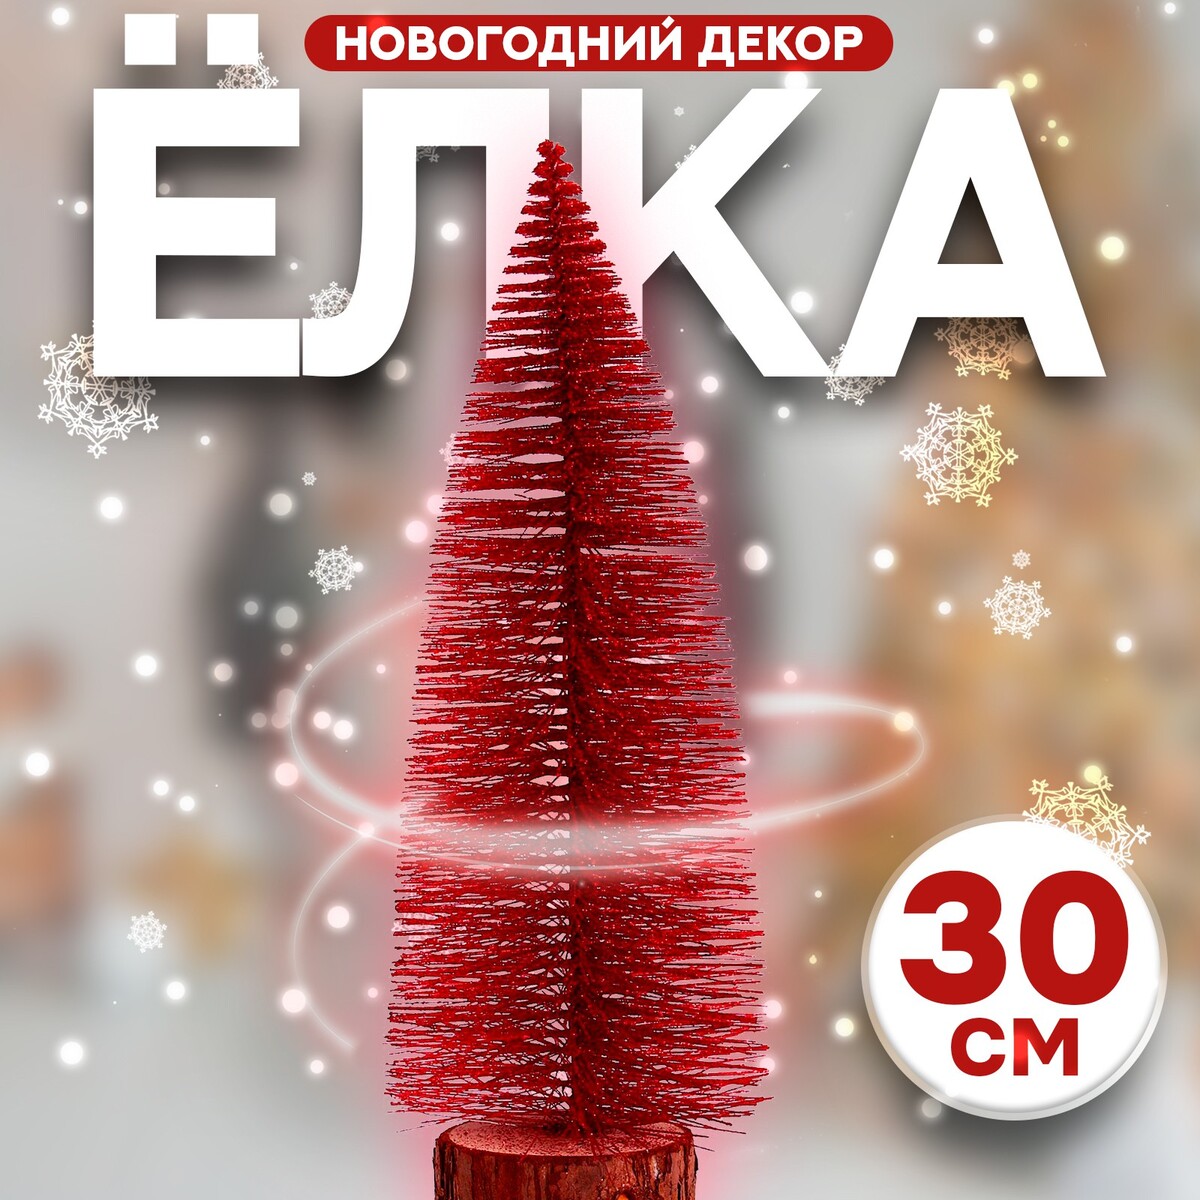 Новогодний декор новогодний декор ёлка в красном е с блестками 8 × 8 × 20 см